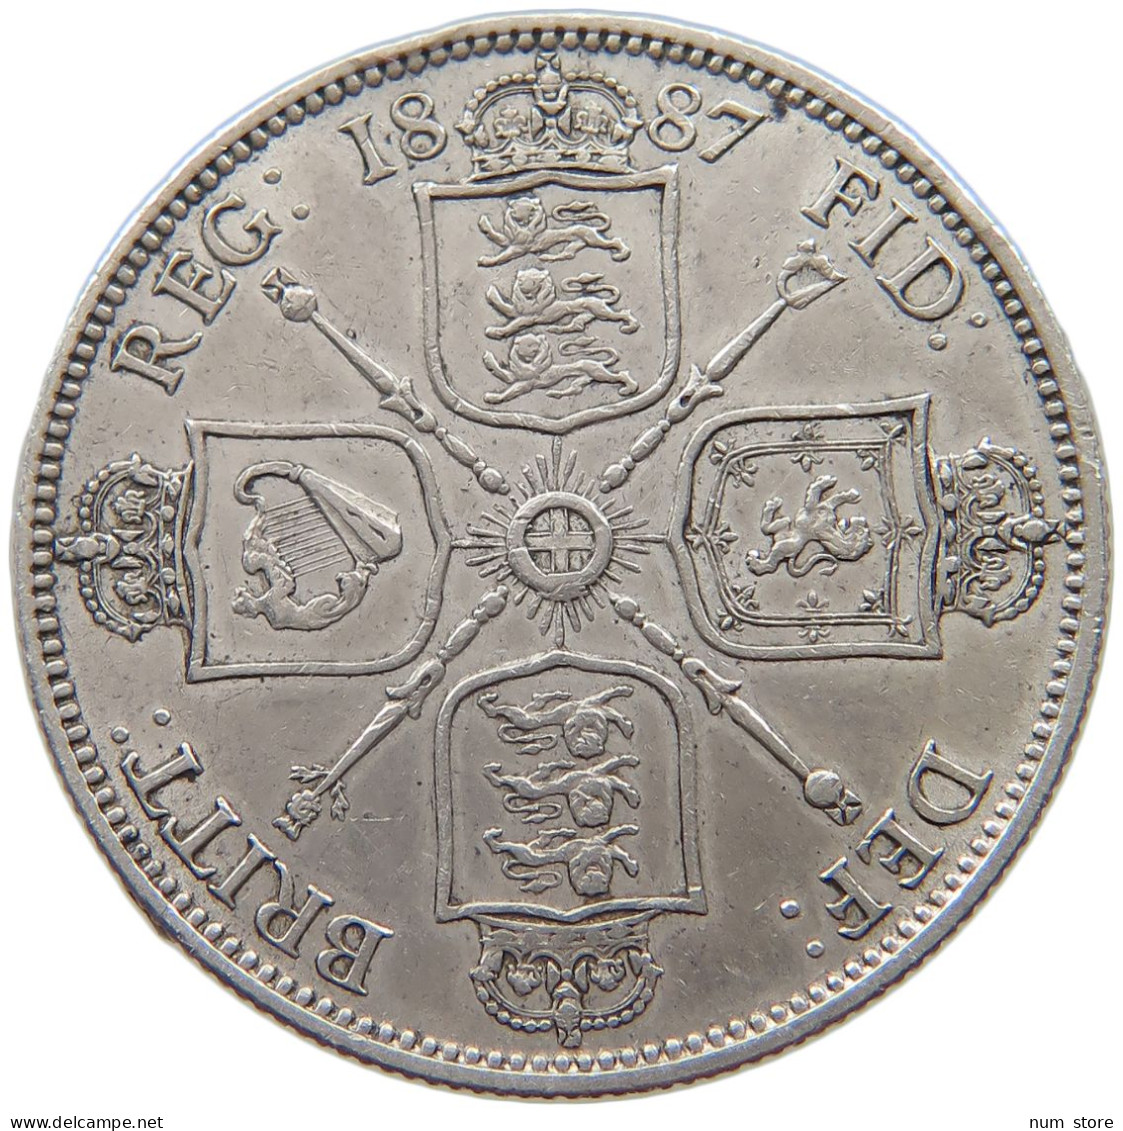 GREAT BRITAIN FLORIN 1887 Victoria 1837-1901 #a003 0175 - J. 1 Florin / 2 Shillings